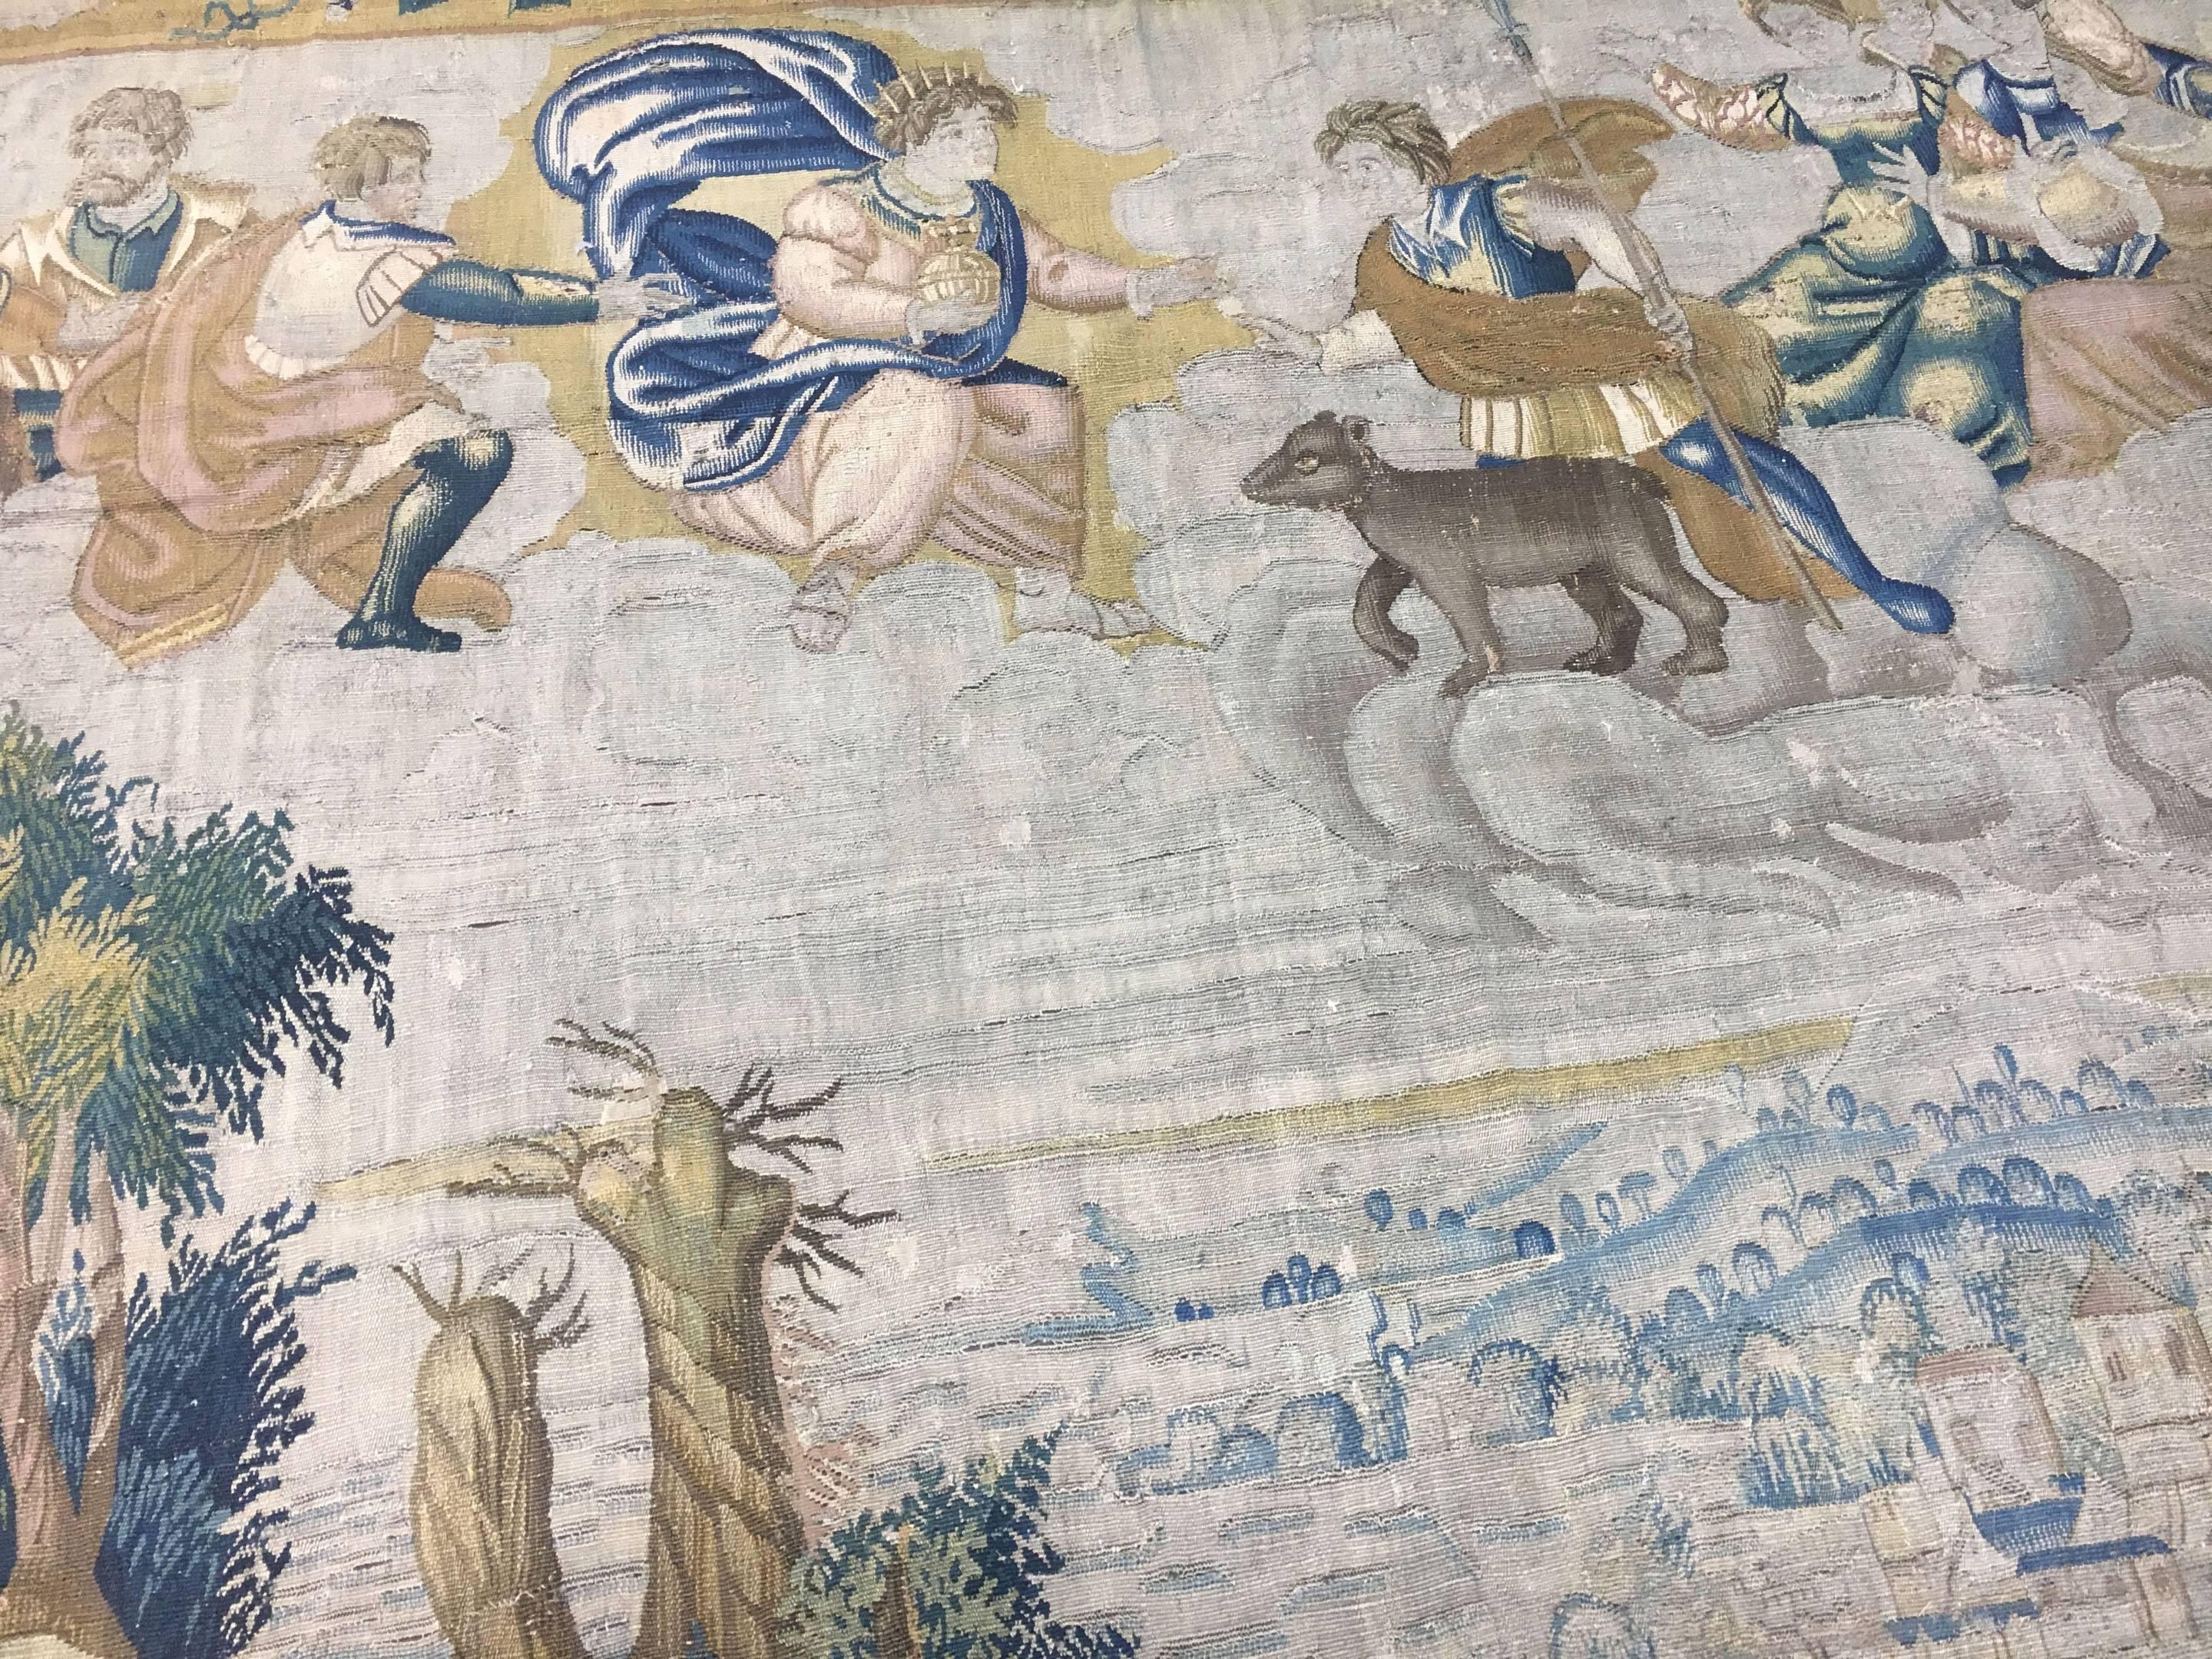 Late 16th Century Audenarde Mythological Tapestry 21'6 x 11'4 For Sale 1